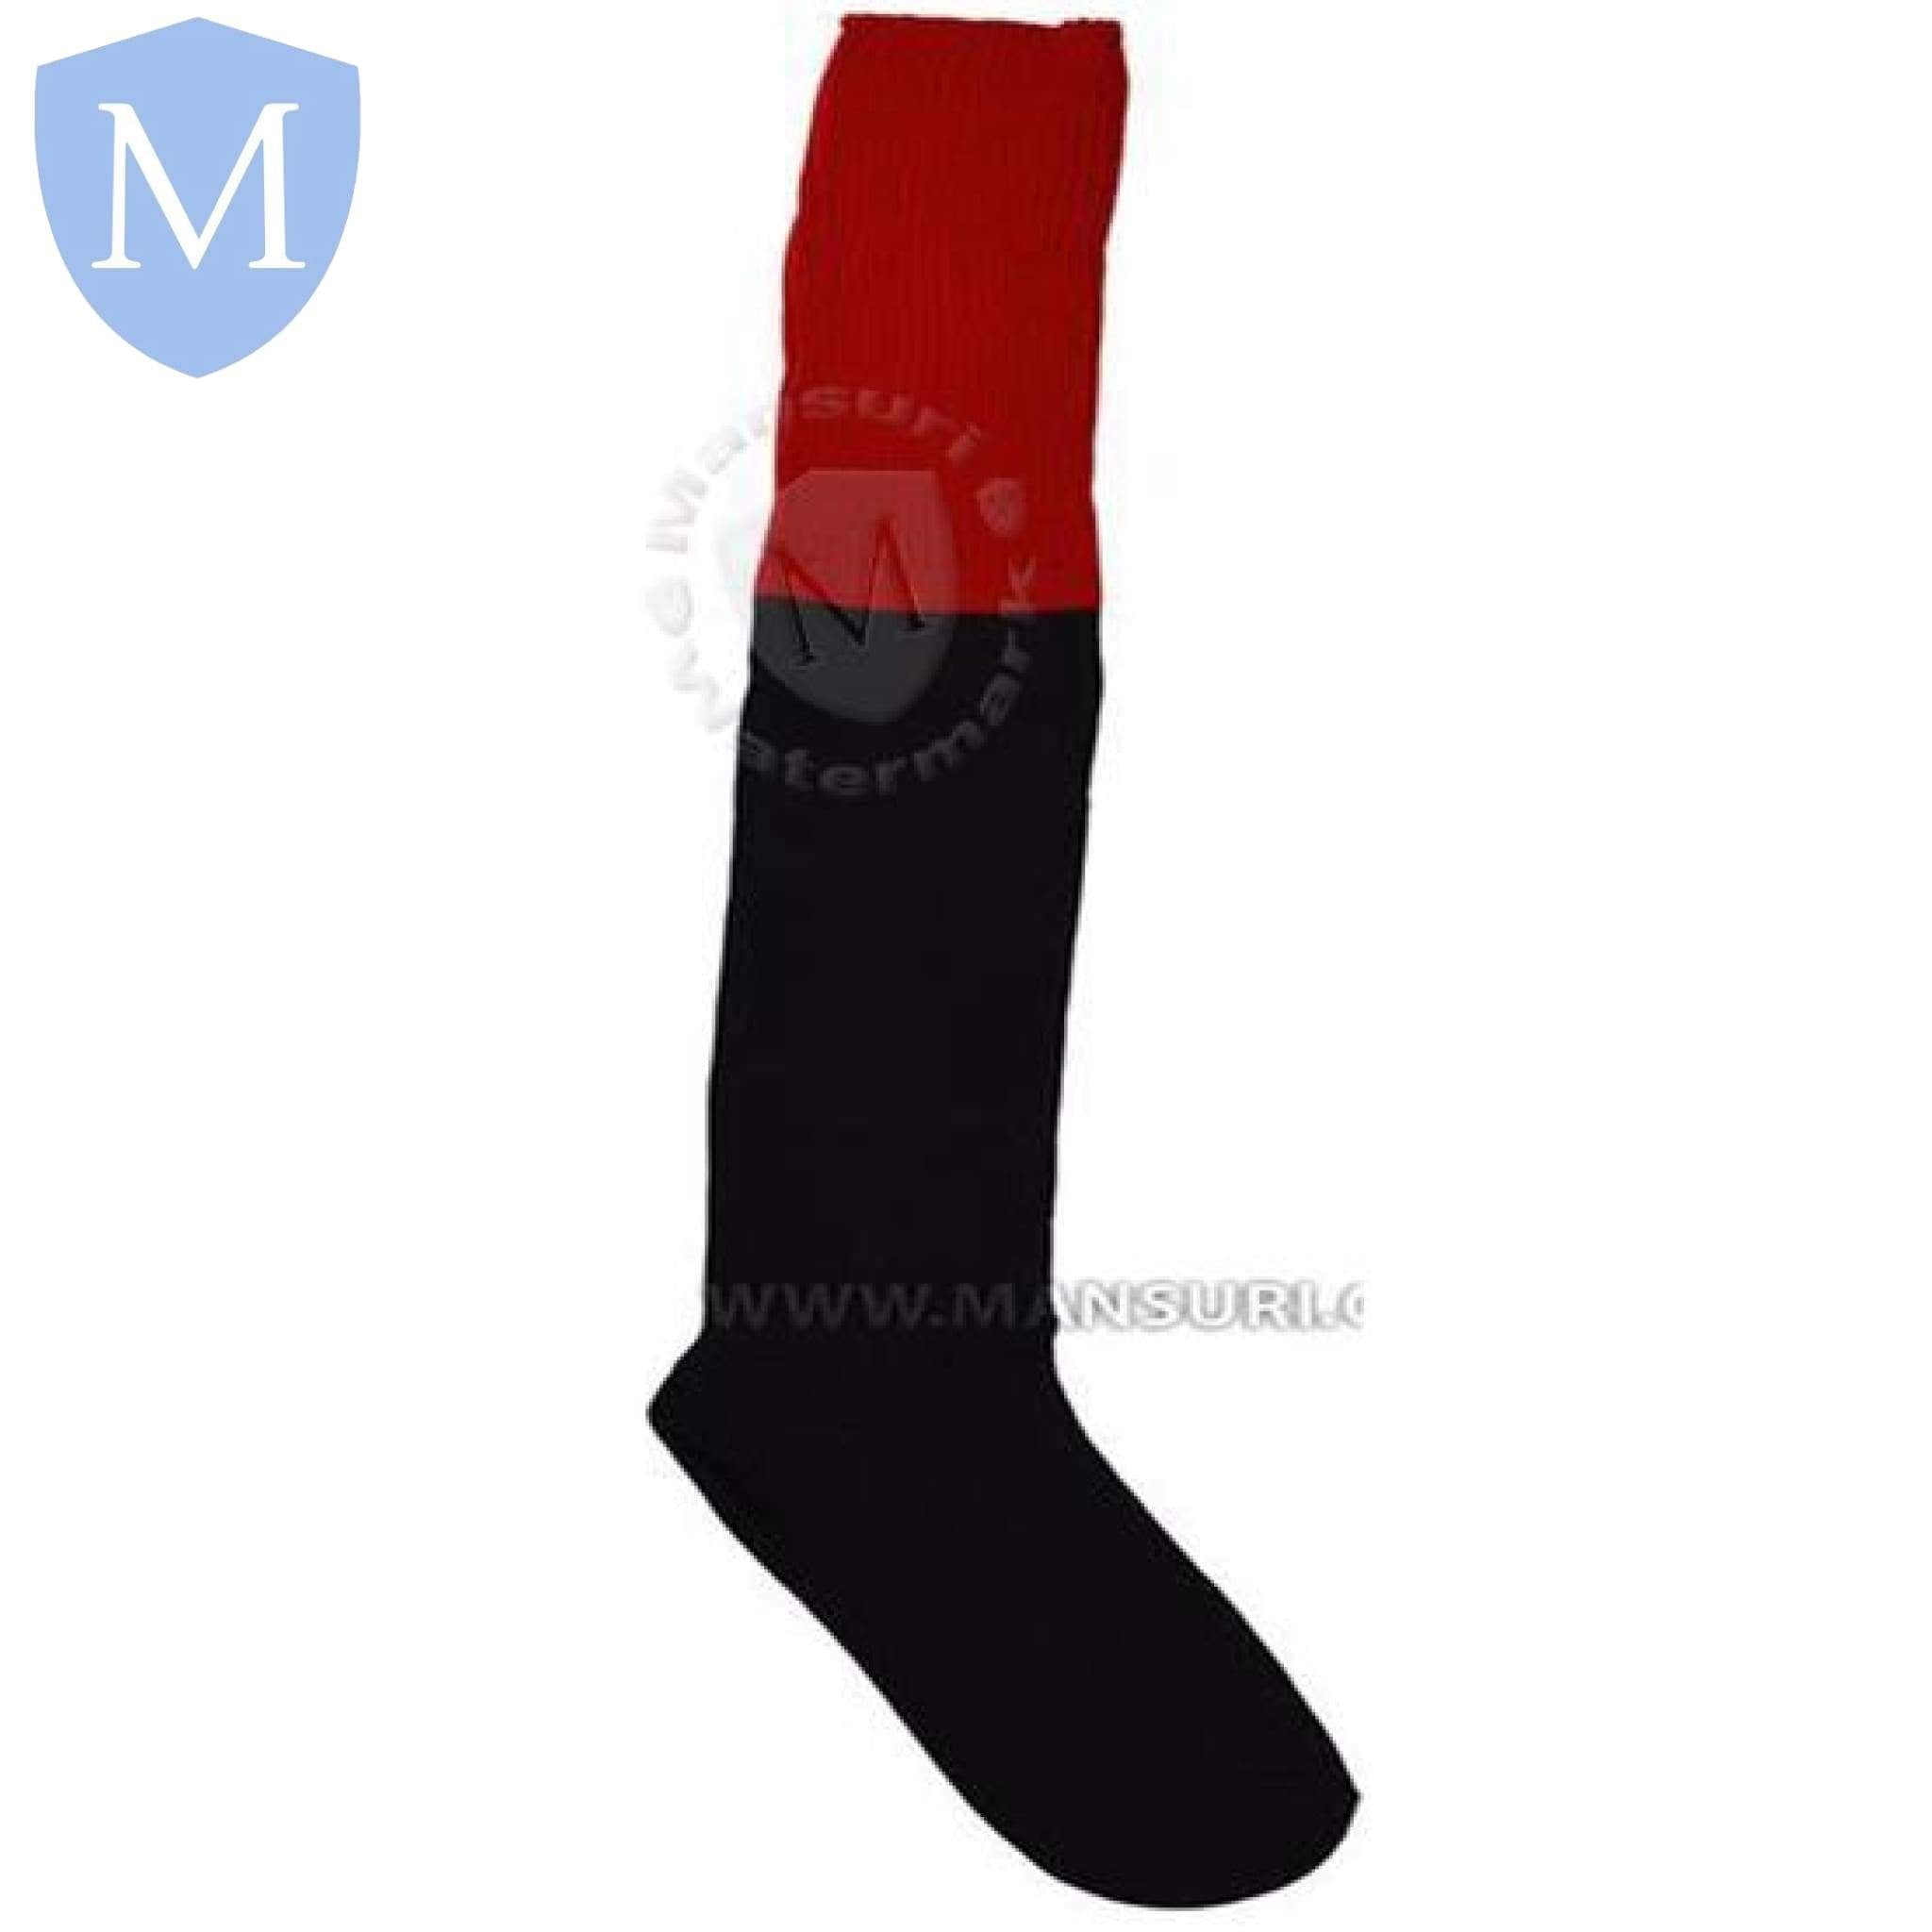 KESH & John Henry Newman Sports Socks Size 12.5-3.5,Size 11-13,Size 1-5,Size 1-5.5,Size 3-6,Size 4-7,Size 6-11,Size 6-12,Size 7-11